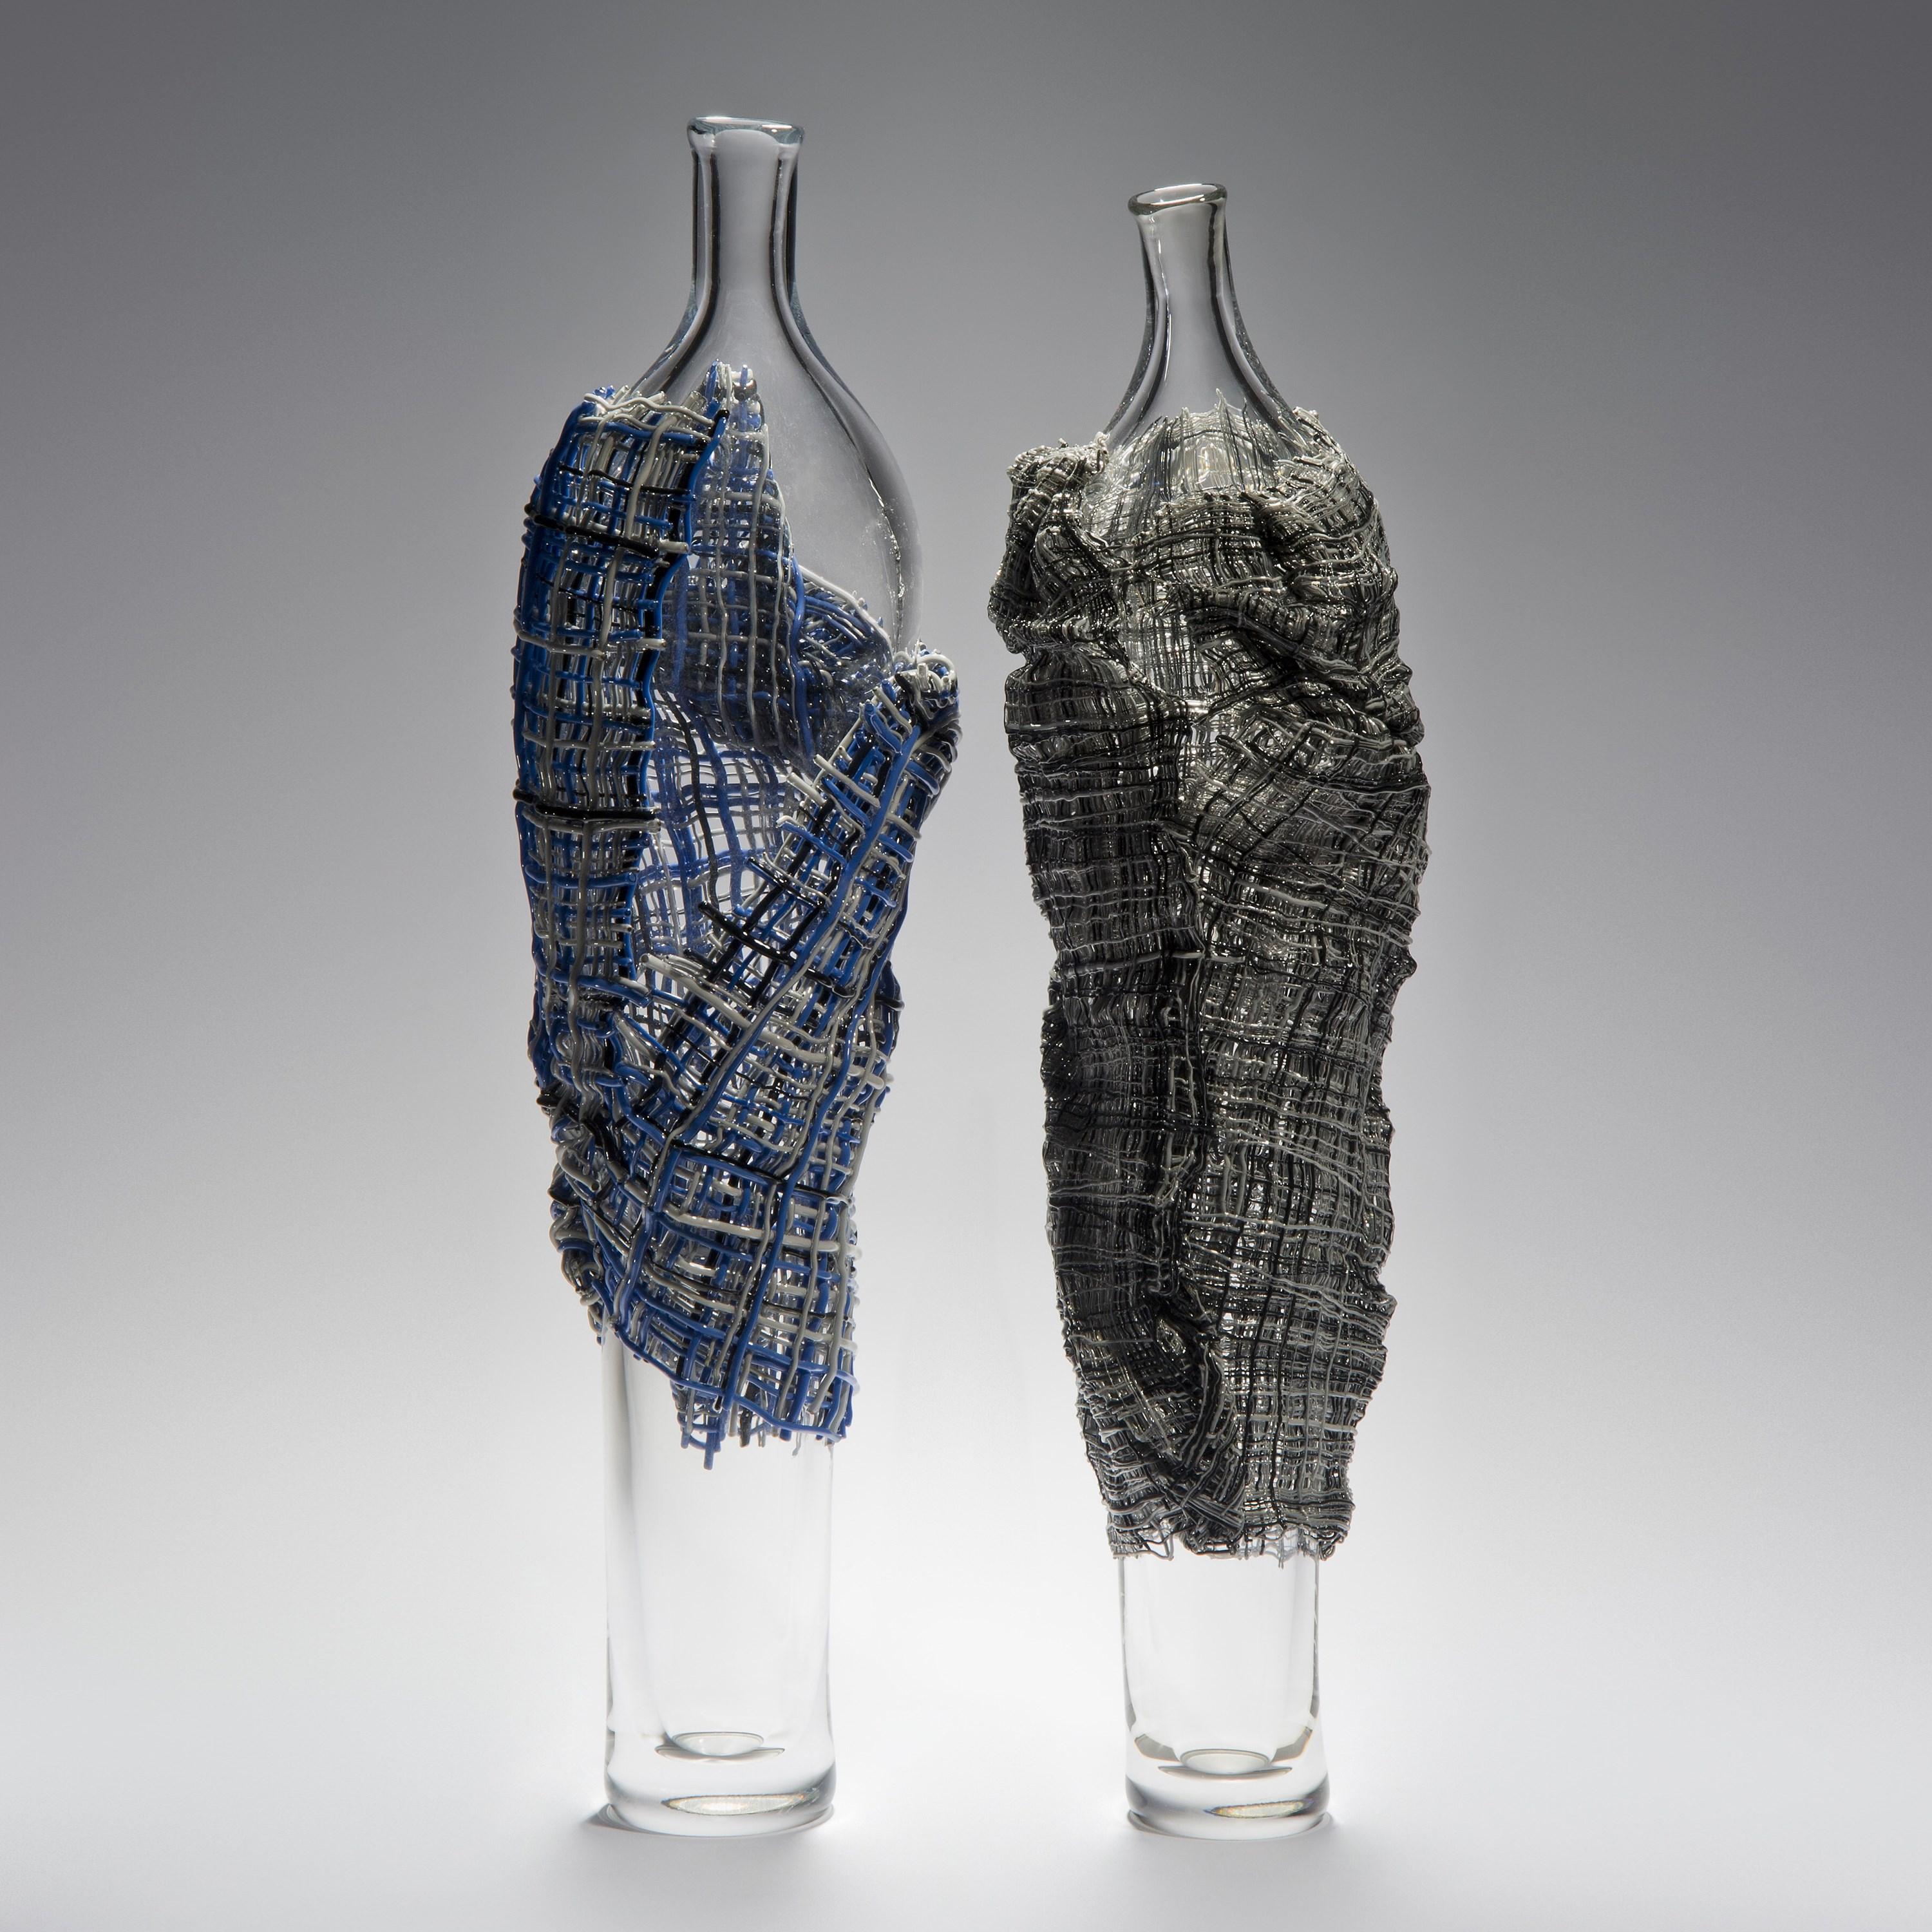 Organic Modern Orestes, a Clear, Blue & Grey Figurative Glass Sculpture by Cathryn Shilling